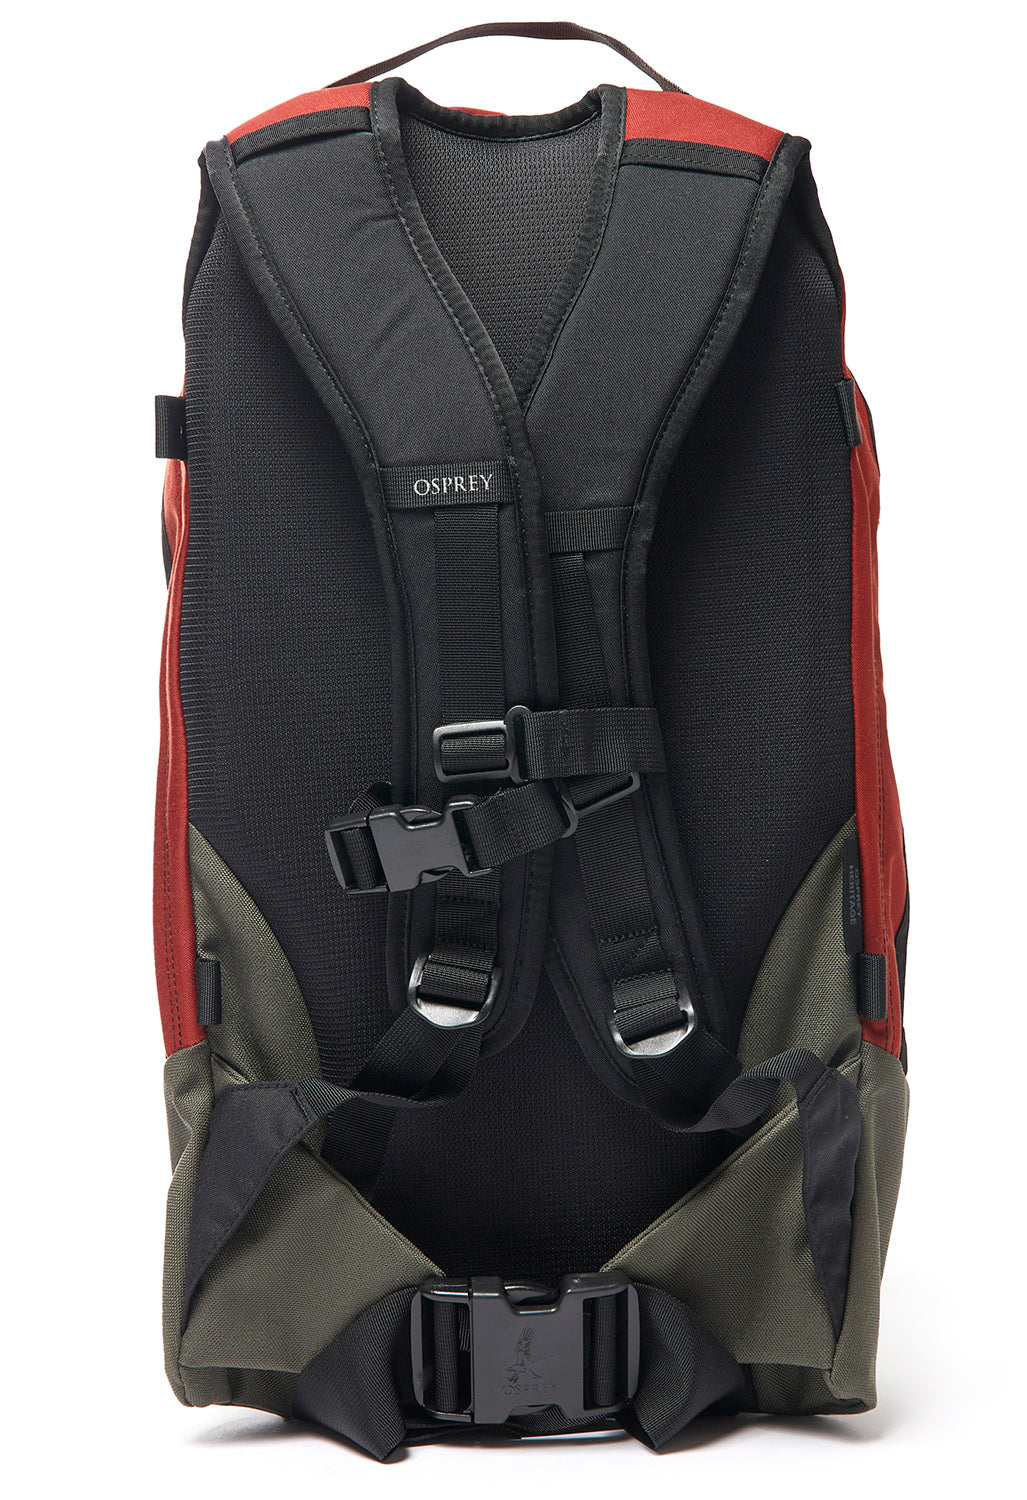 Osprey Simplex 20 Backpack - Bazan Red